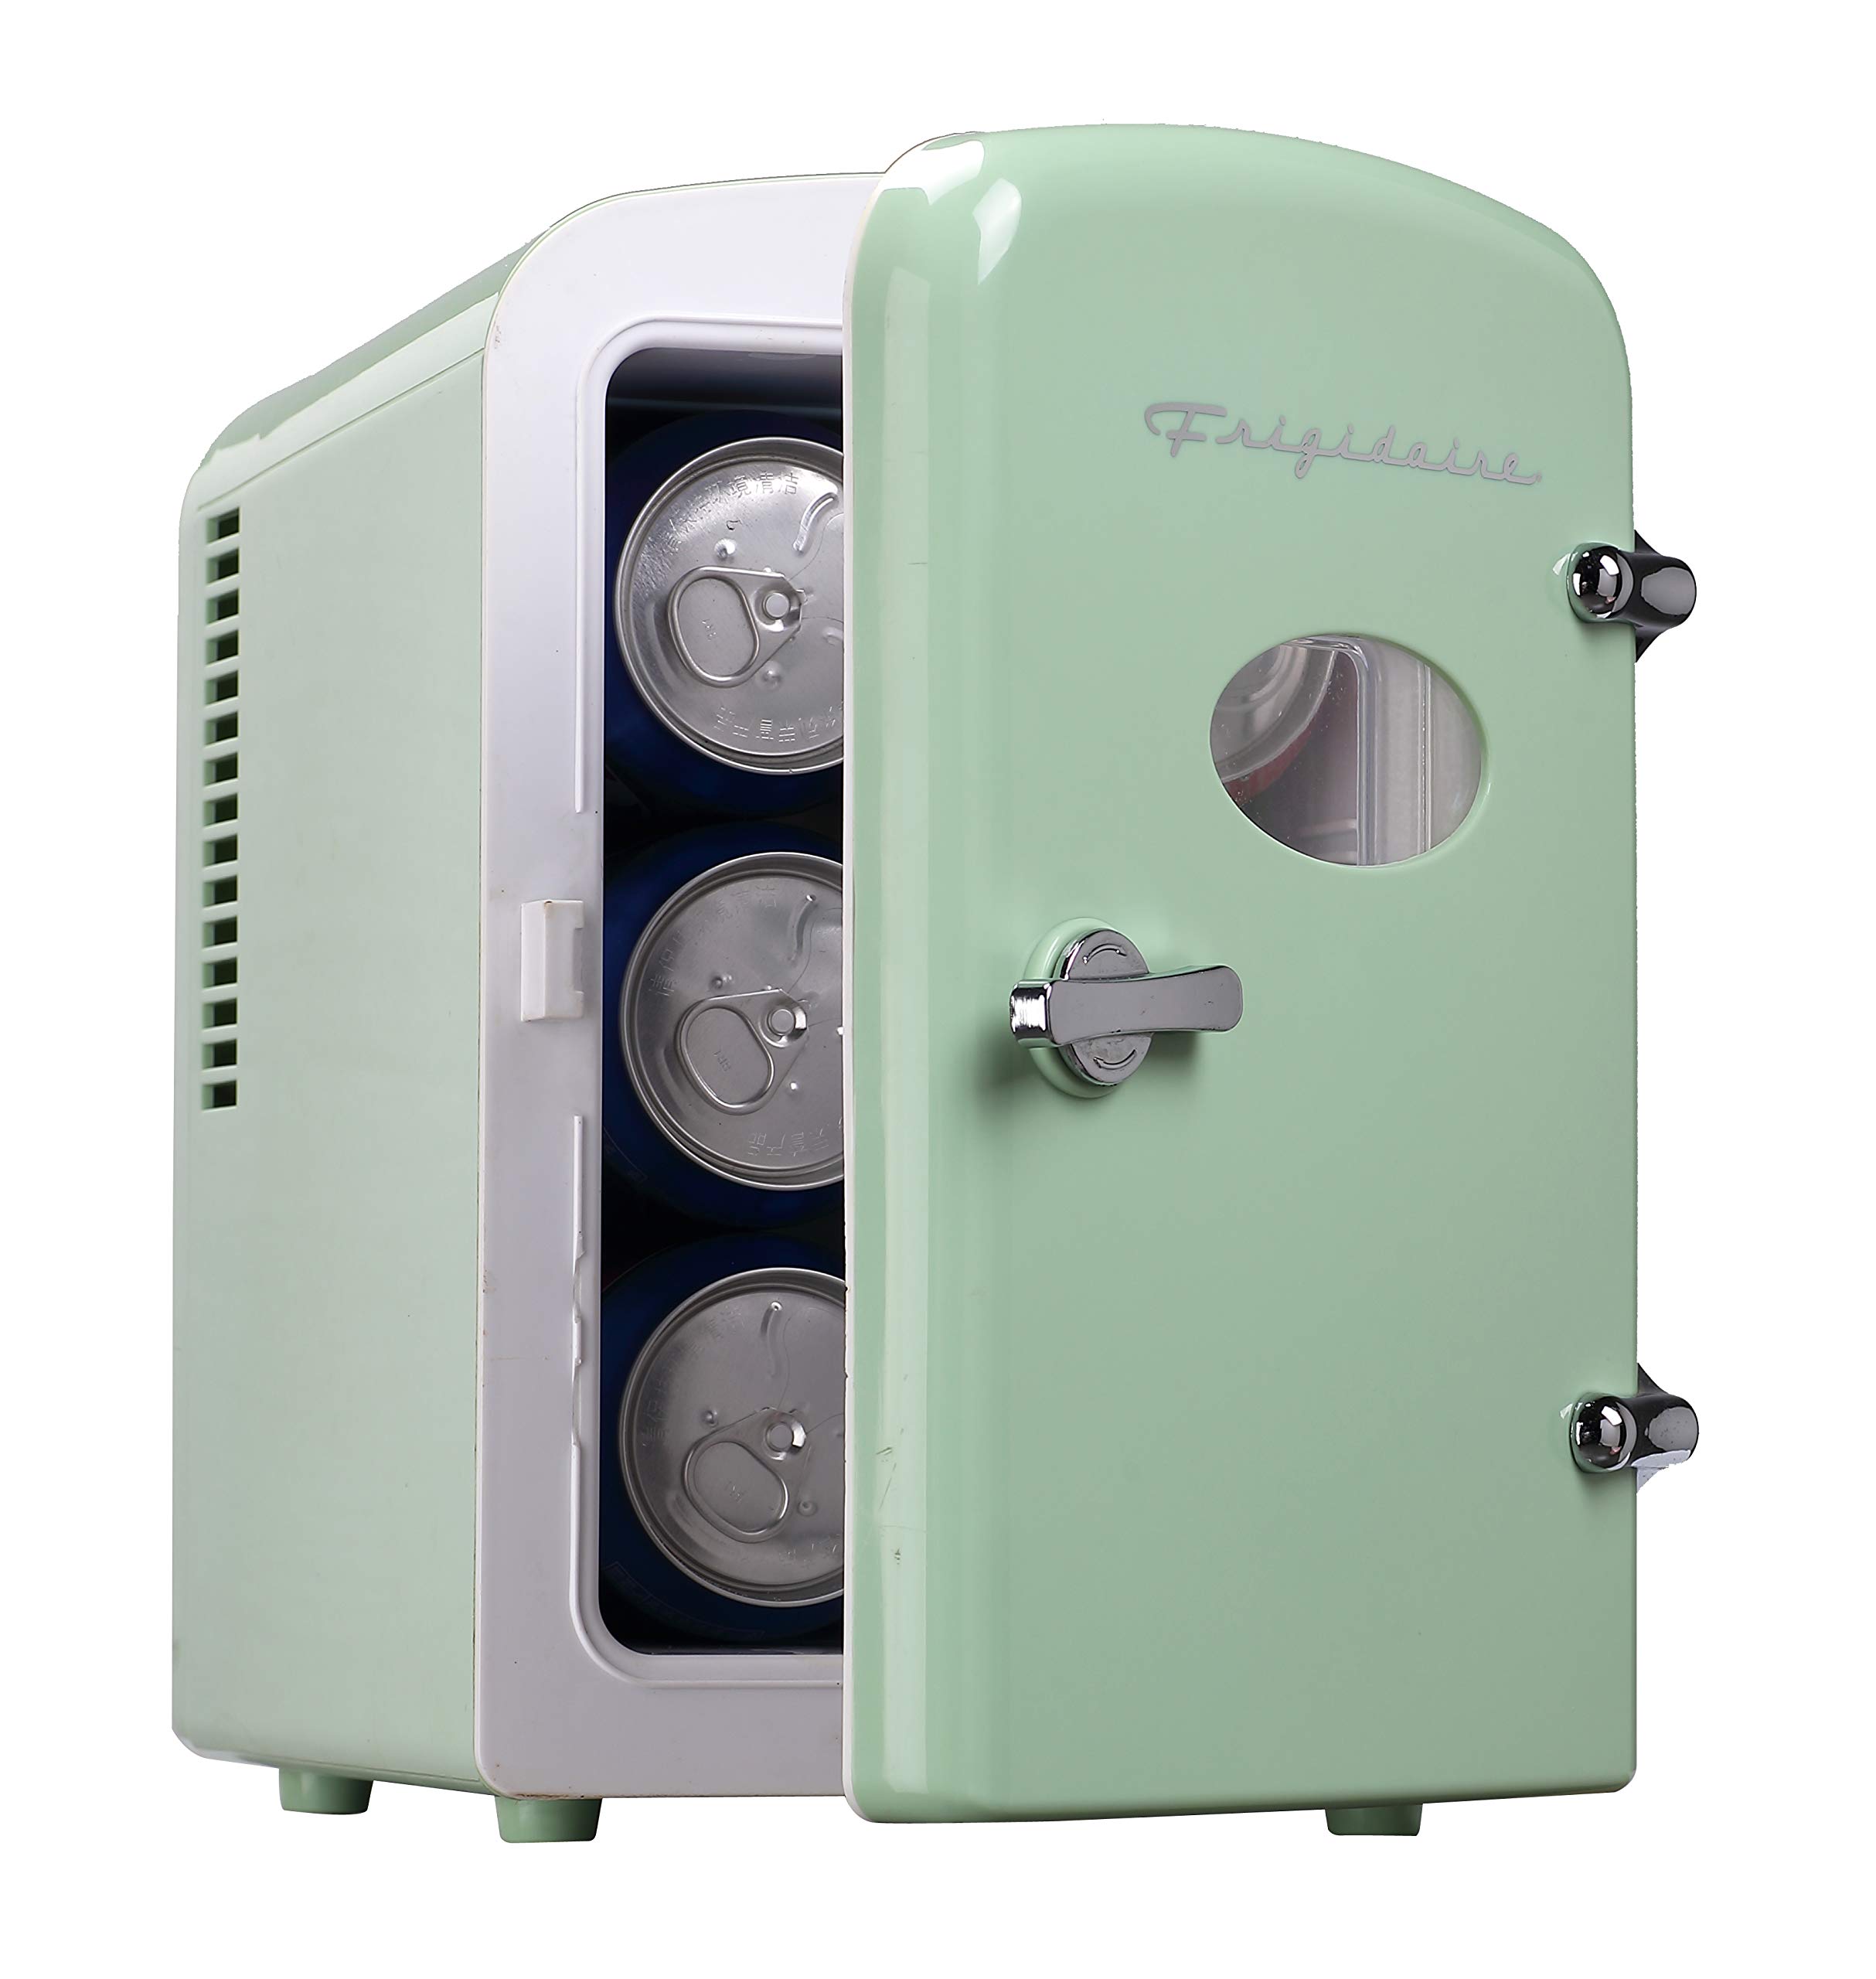 Frigidaire EFMIS129-MINT 6 Can Beverage Cooler, Mint, 4 Liters